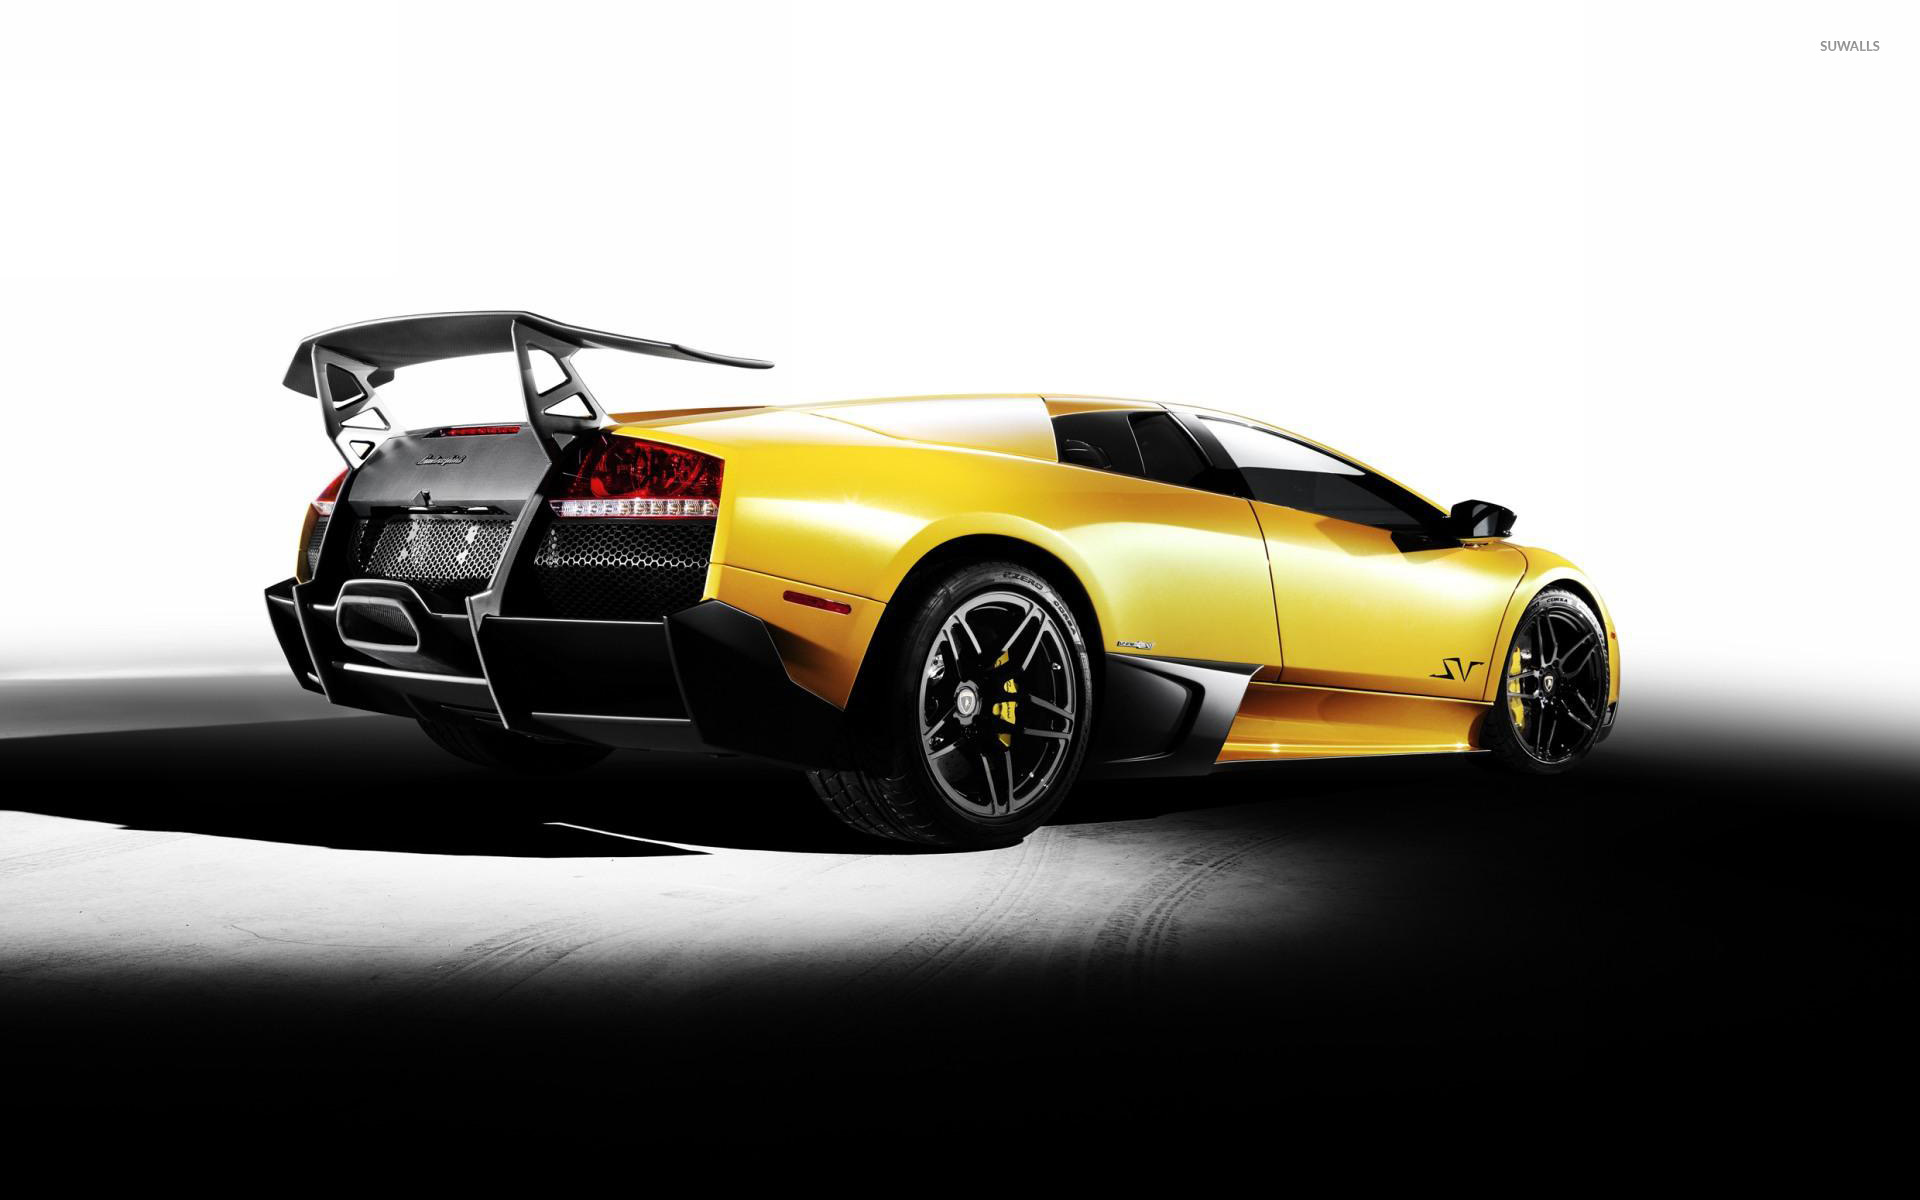 Back Side View Of A Yellow Lamborghini Murcielago Wallpaper Car